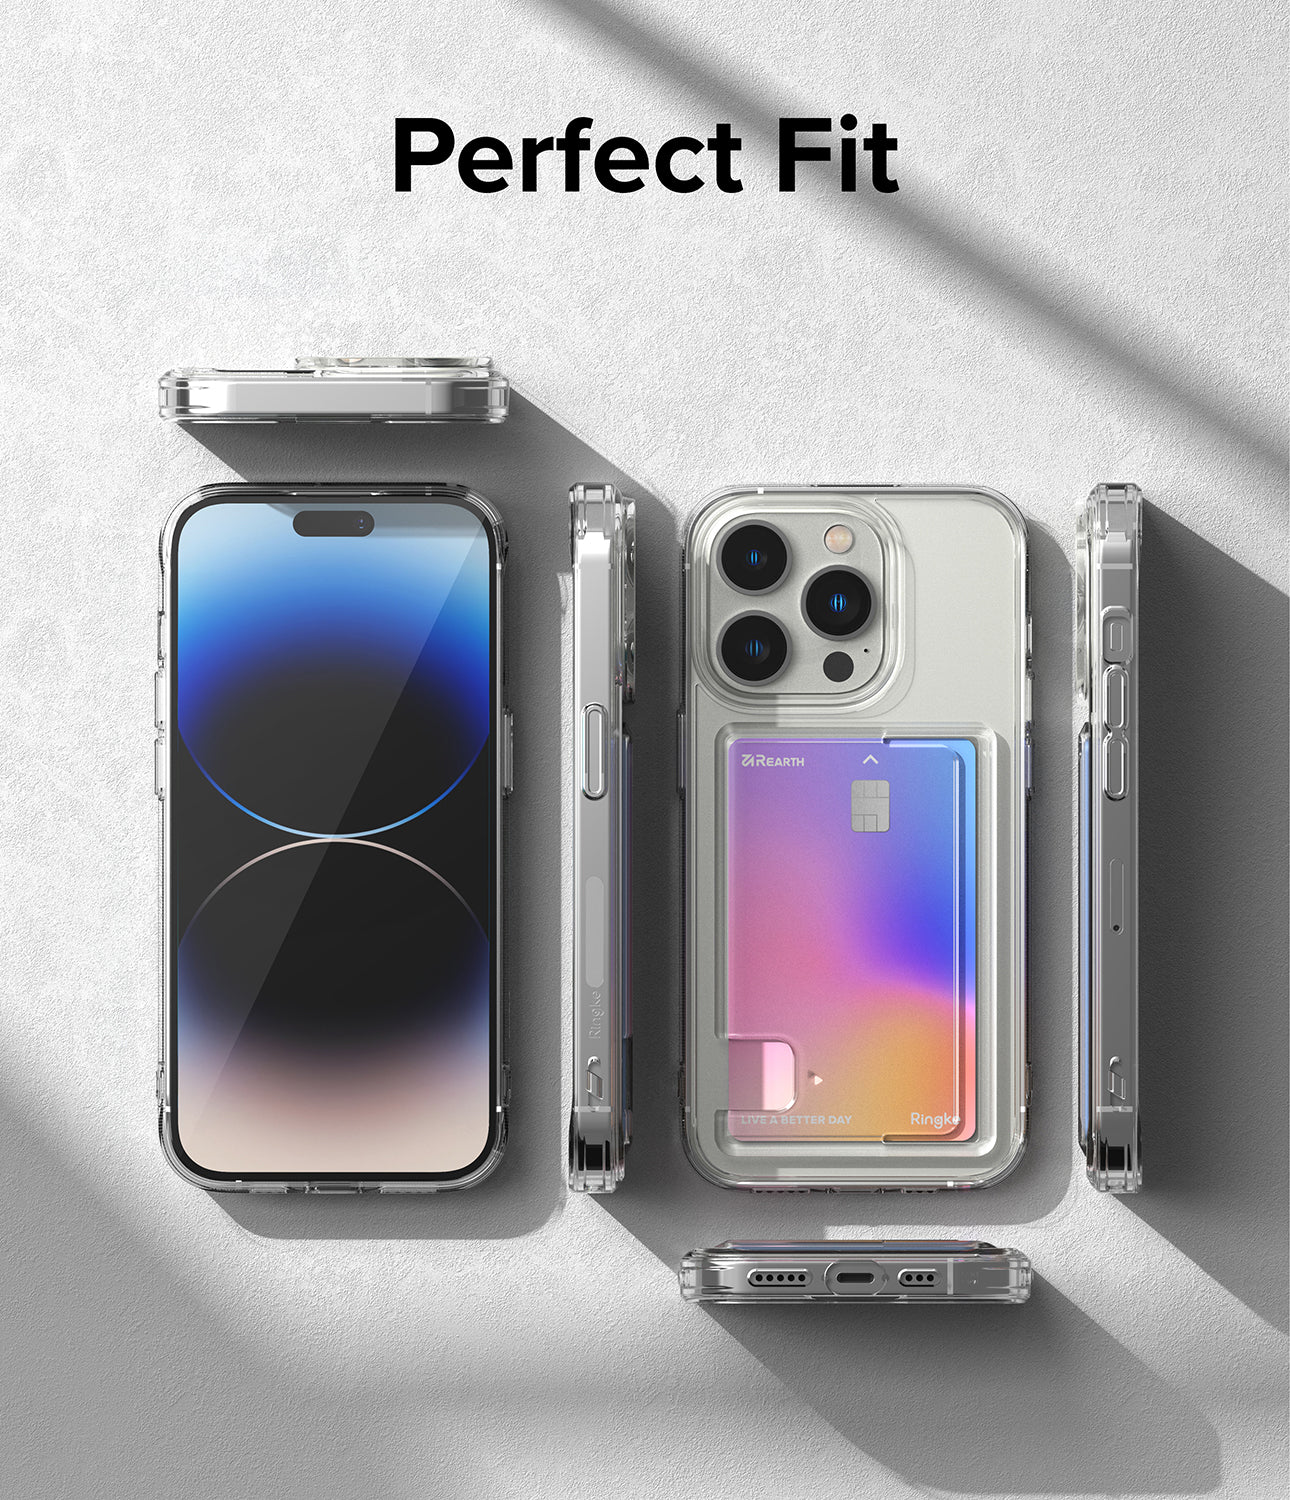 iPhone 14 Pro Case | Fusion Card